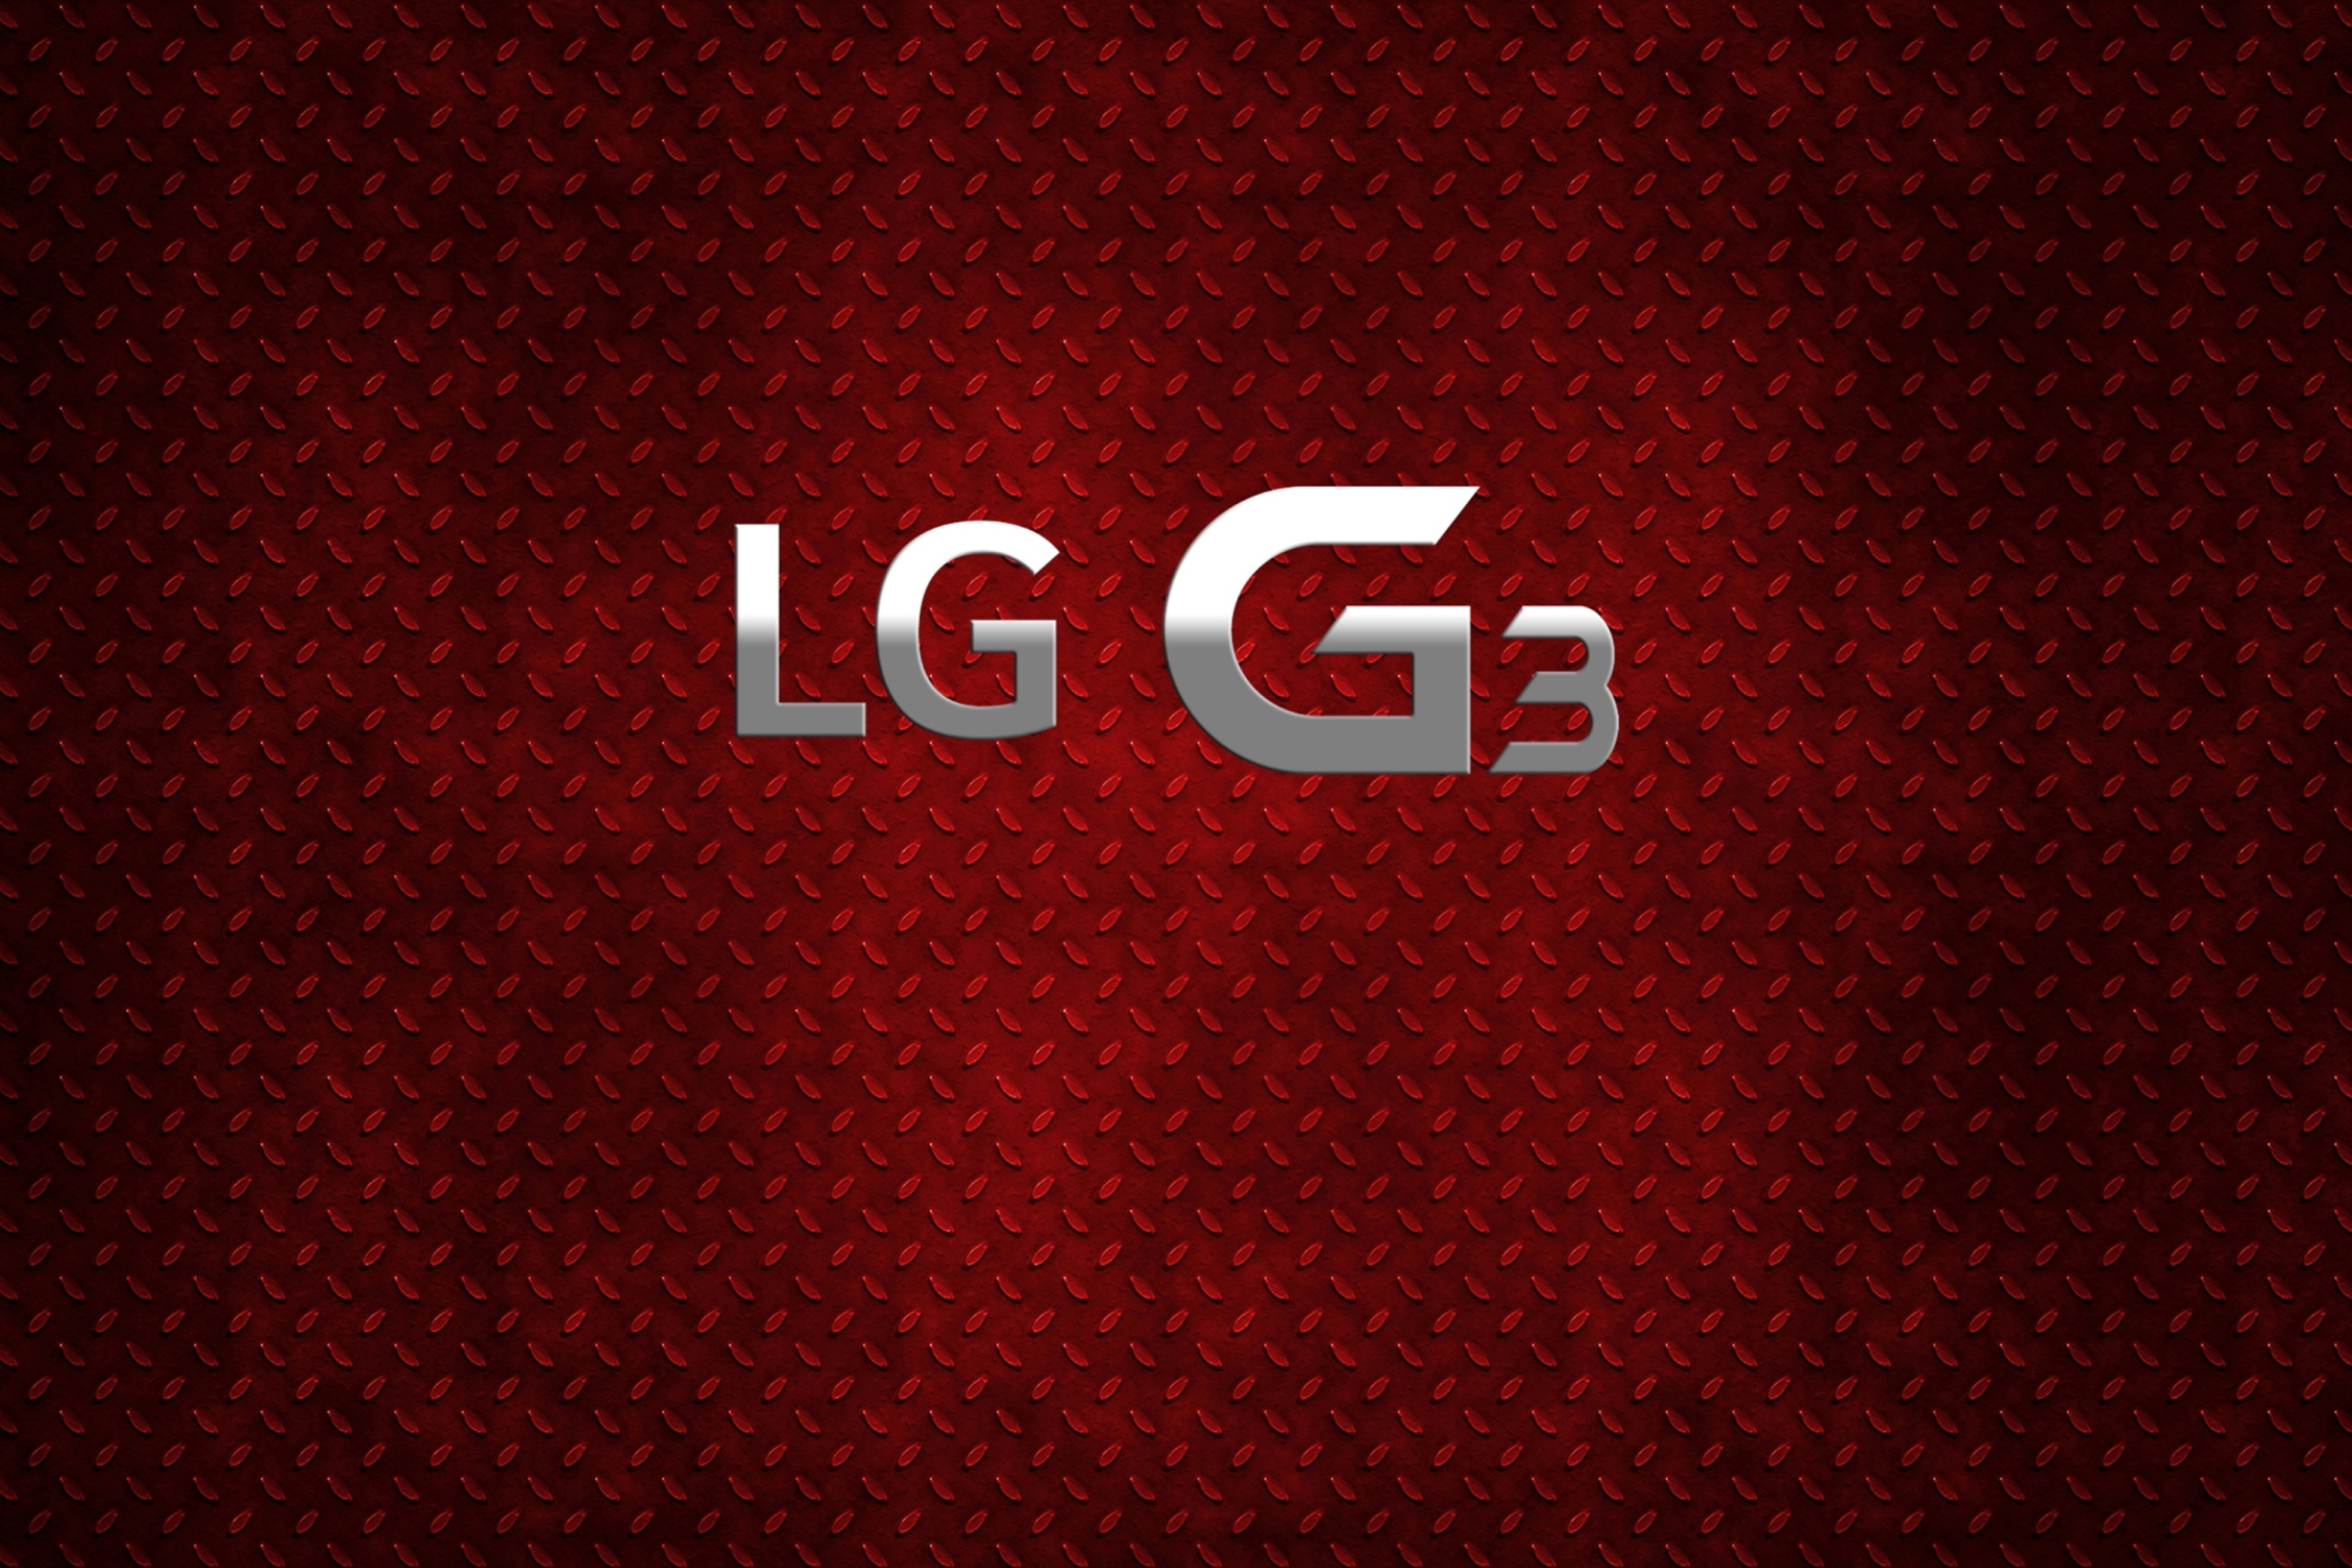 LG G3 wallpaper 2880x1920